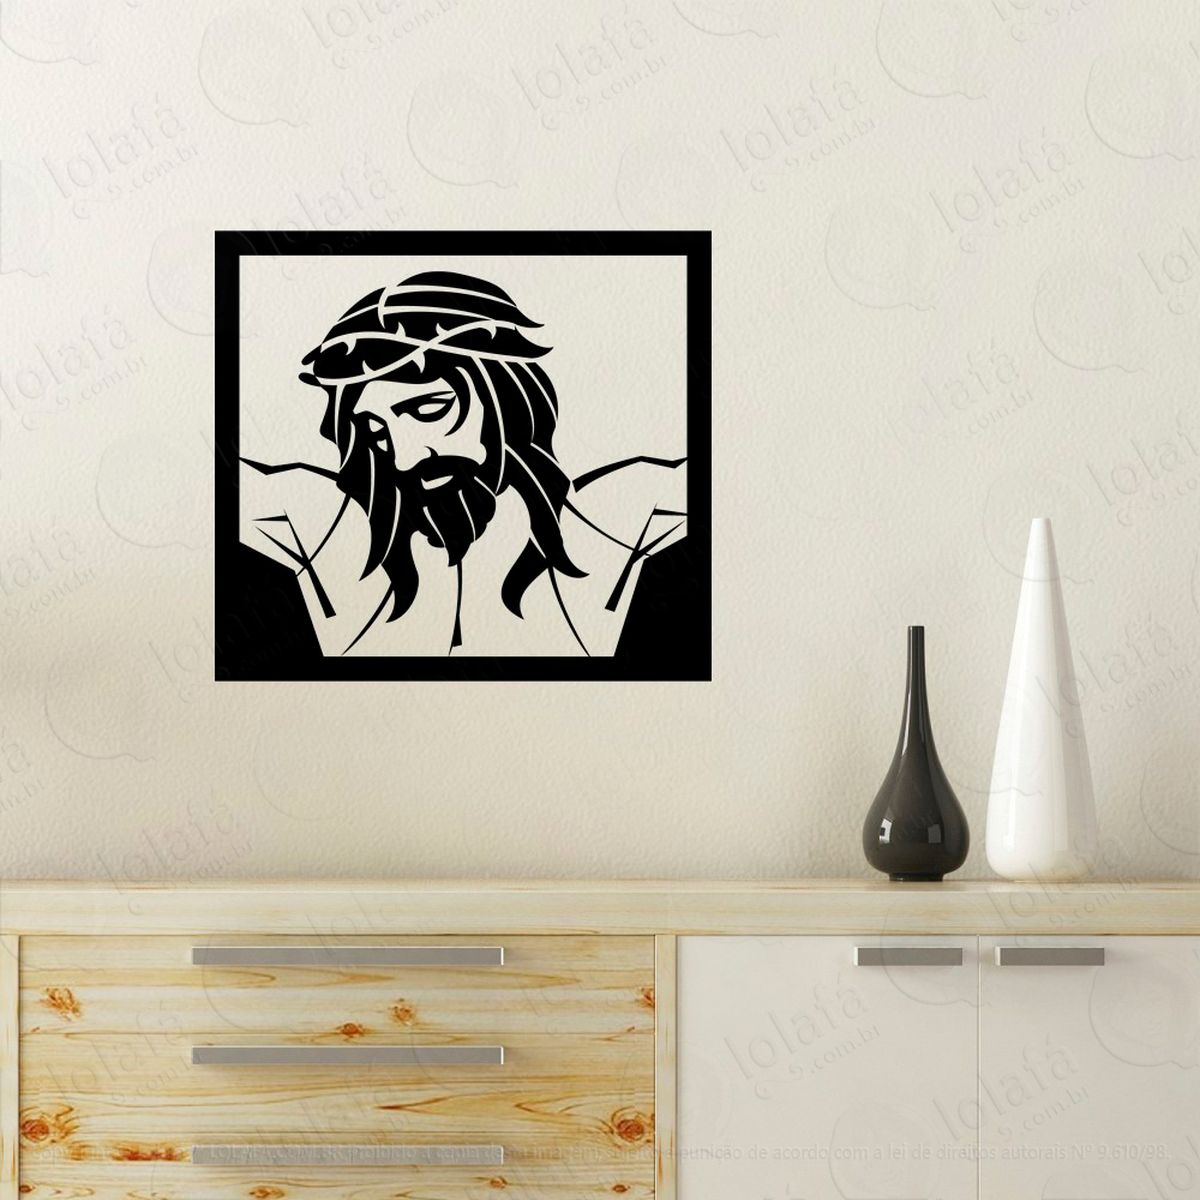 jesus cristo adesivo de parede decorativo para casa, quarto, sala e vidro - mod:14